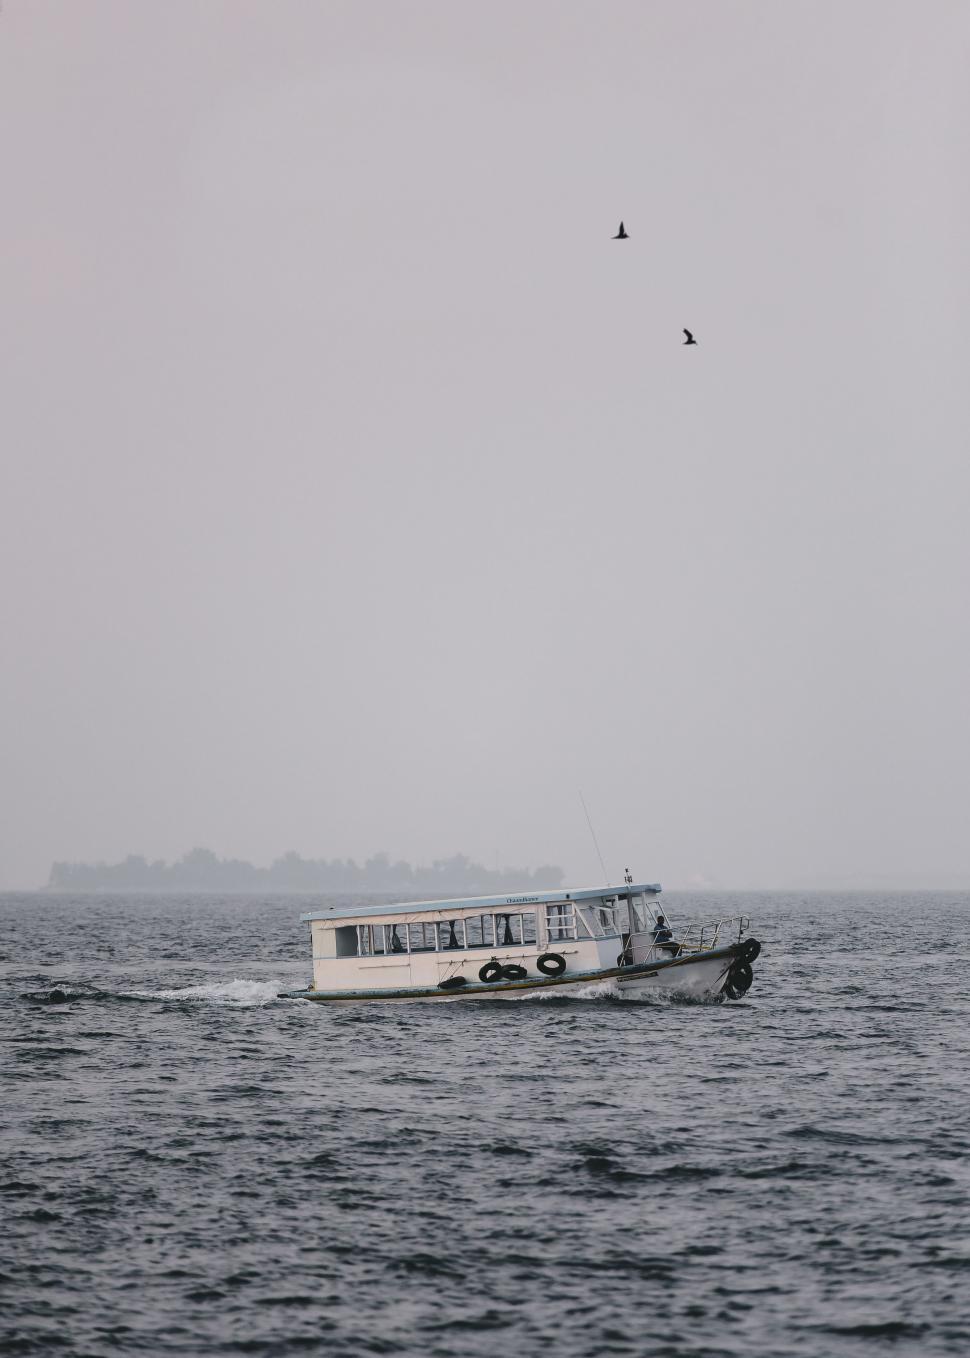 Free Image of Small Boat Adrift in Vast Ocean 